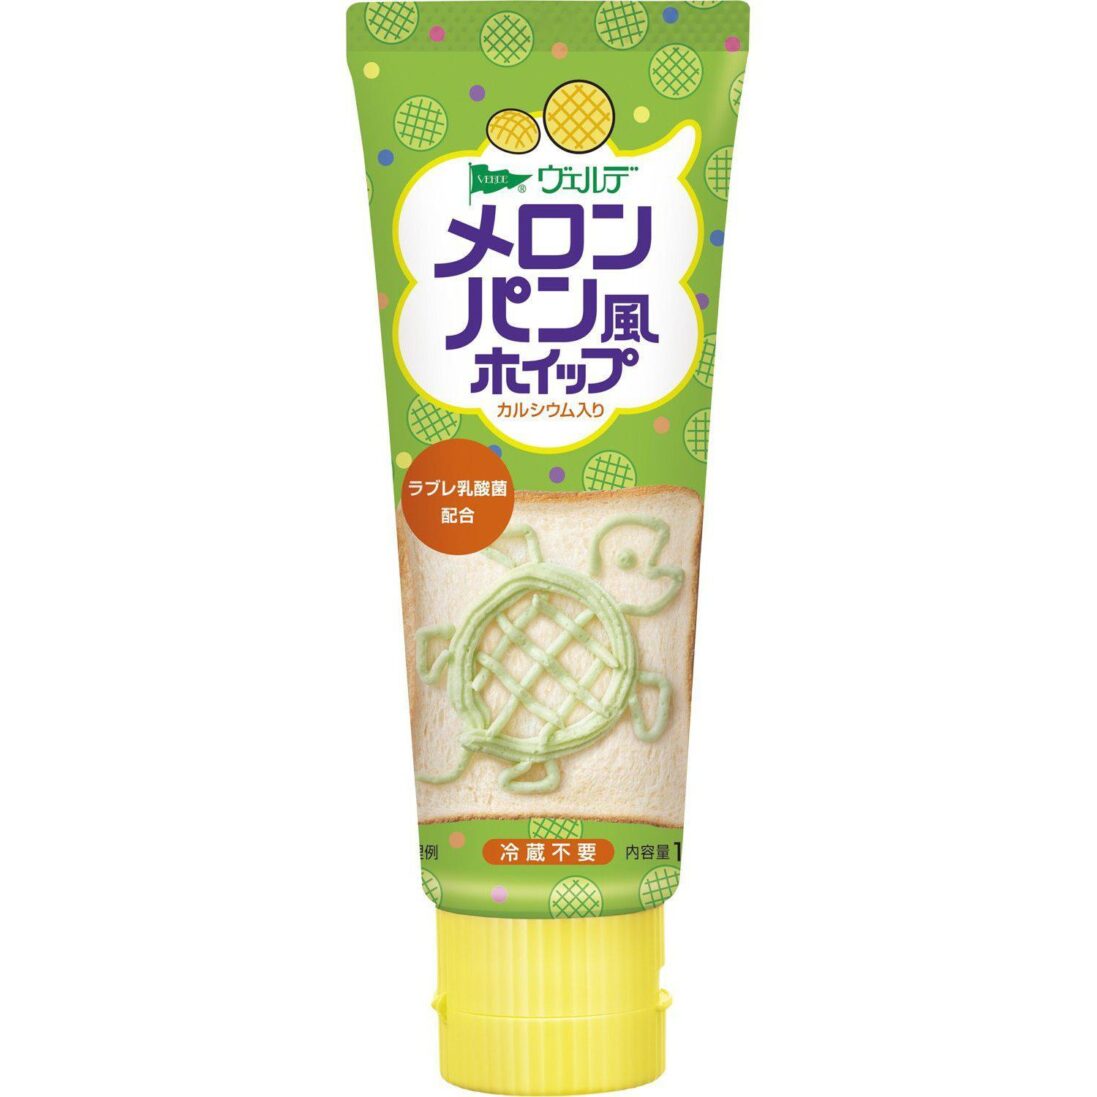 Kewpie-Verde-Melon-Pan-Whip-Japanese-Melon-Bread-Toast-Spread-100g-Japanese-Taste_2048x.jpg